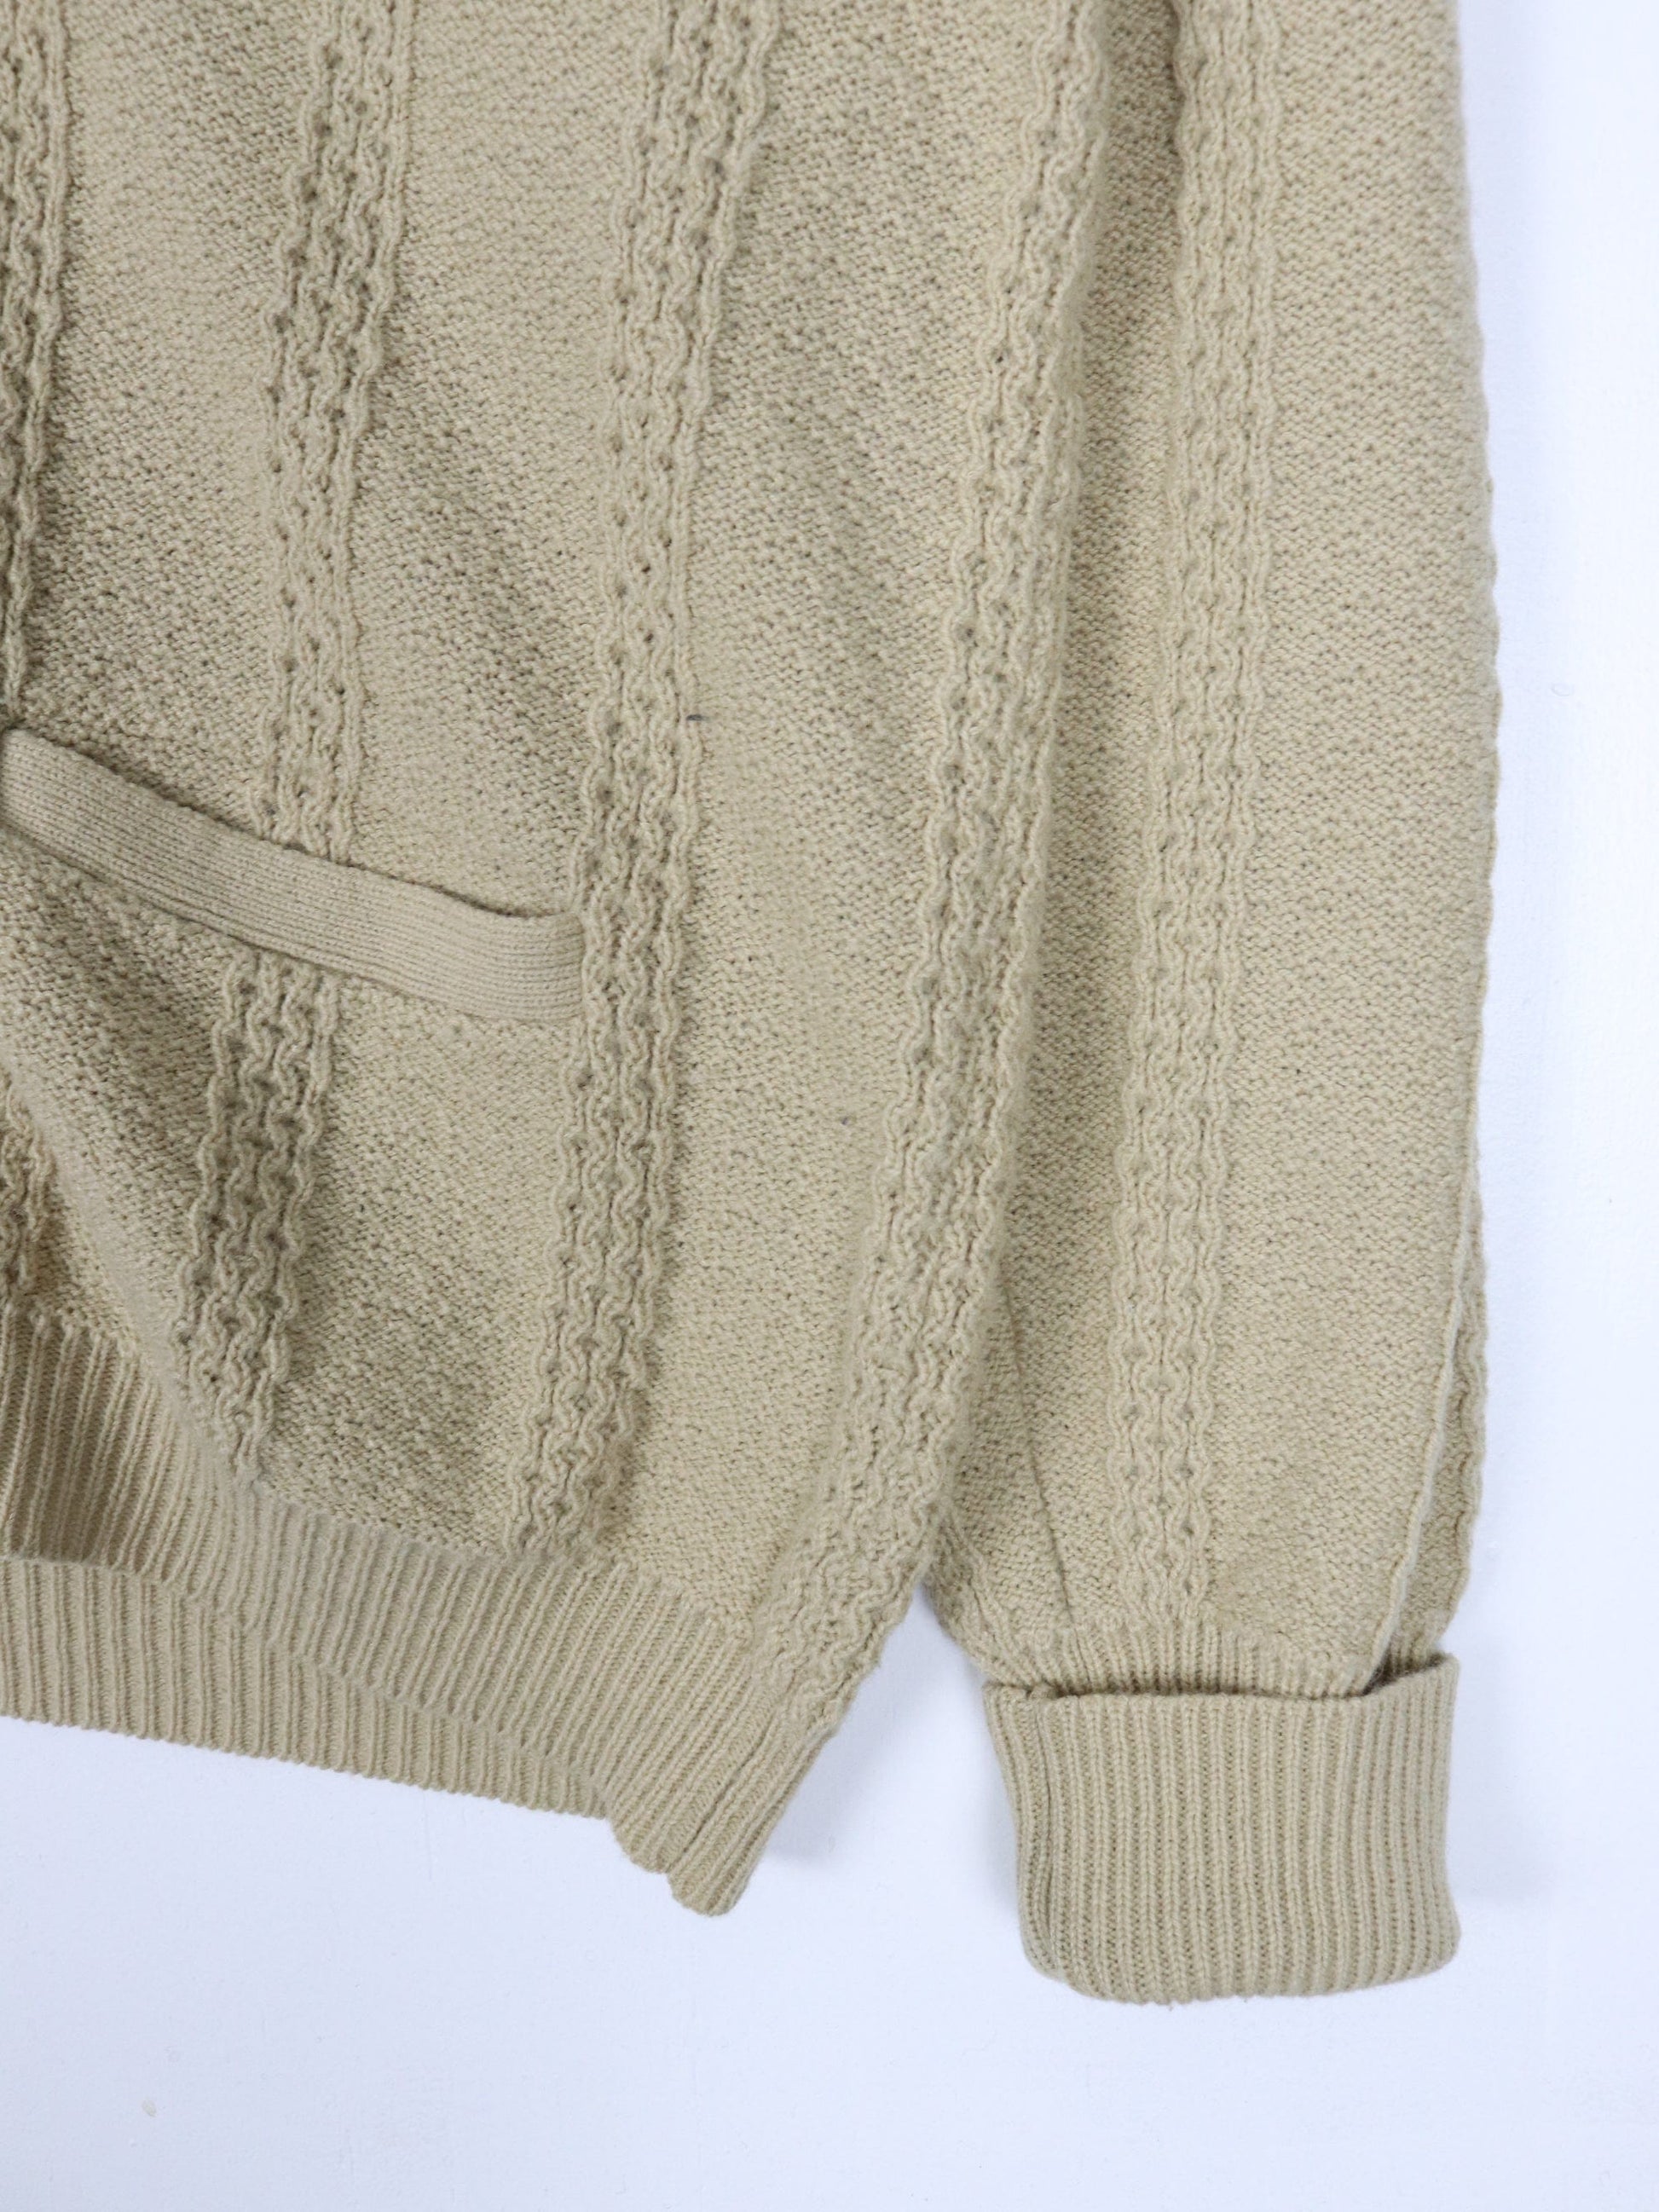 Other Knitwear Vintage Cardigan Sweater Mens Large Brown Knit Sweatshirt